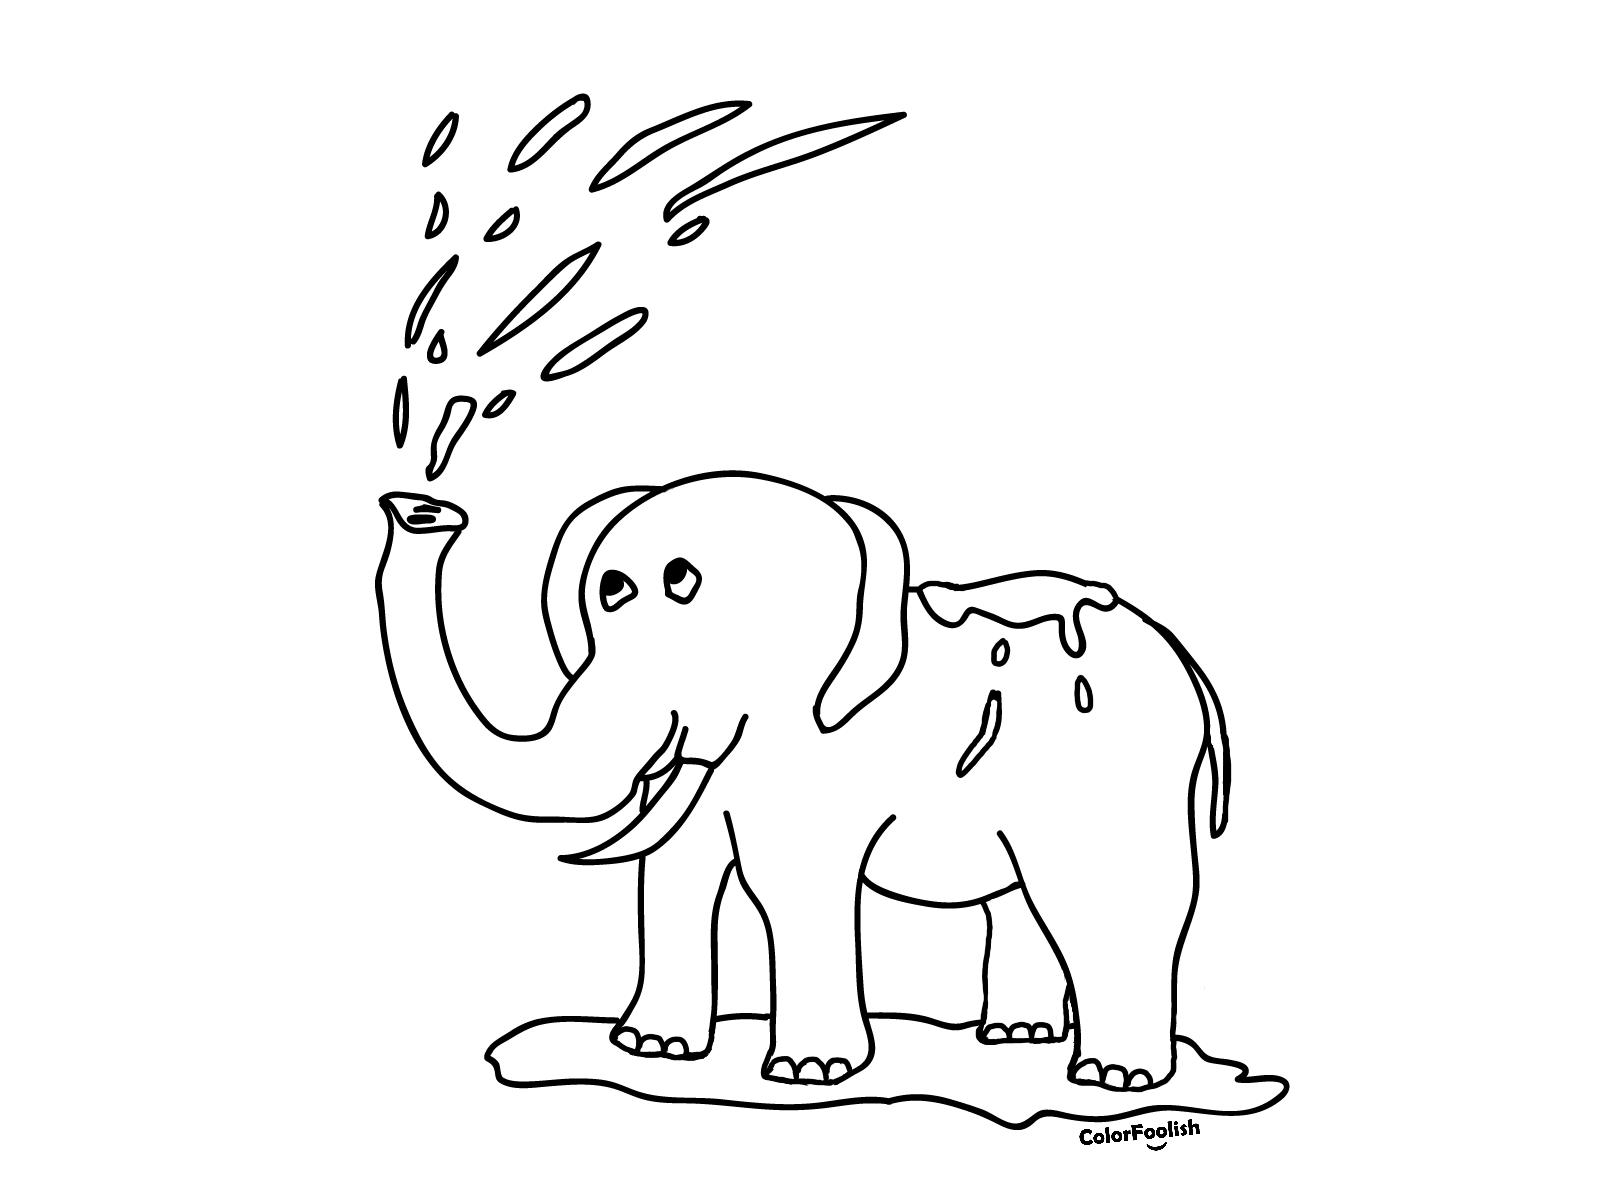 Mewarna halaman gajah yang bermain dengan air